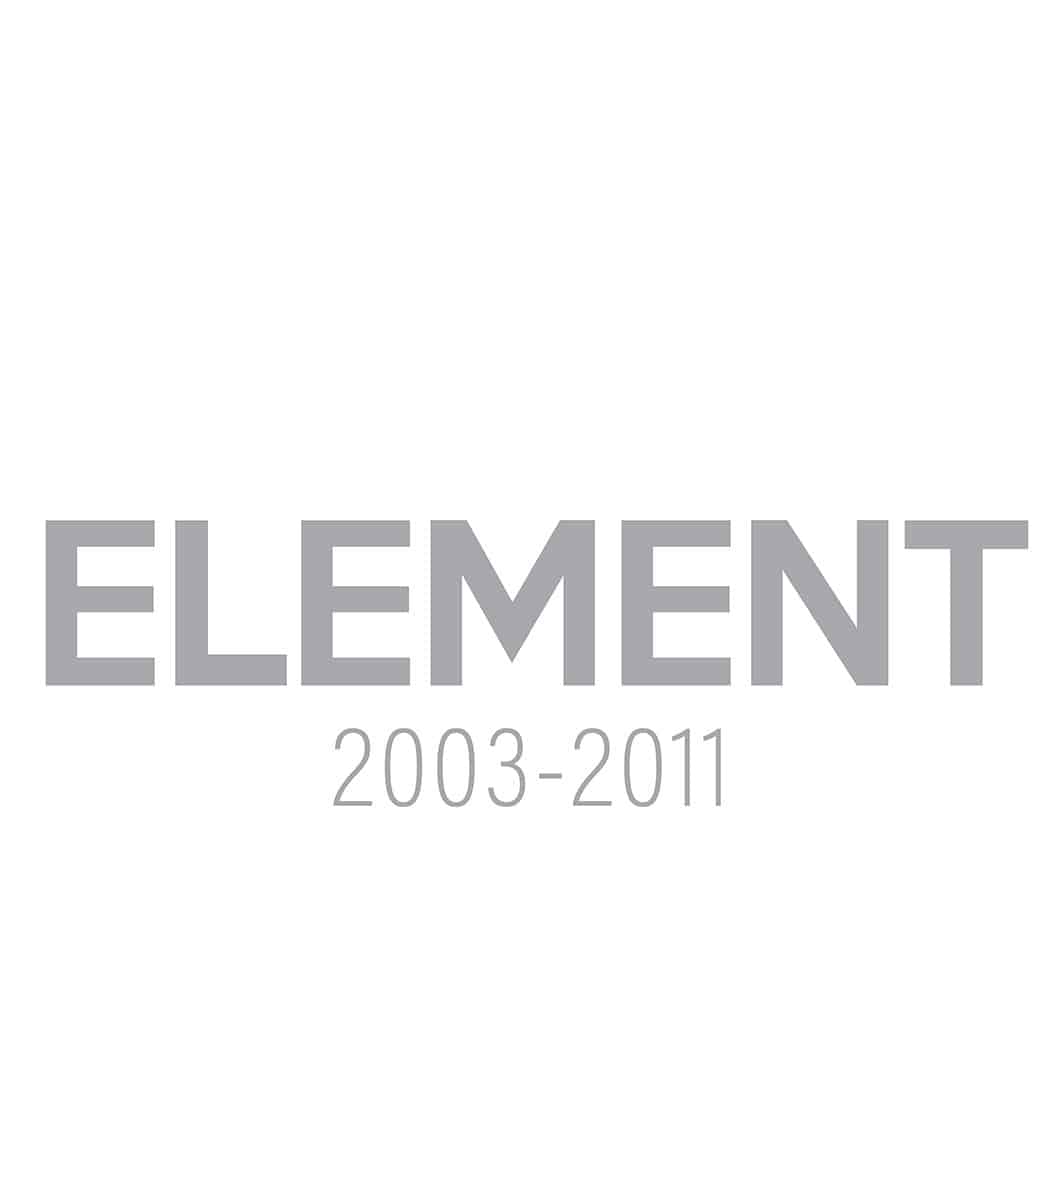 Honda Element 2003-2011